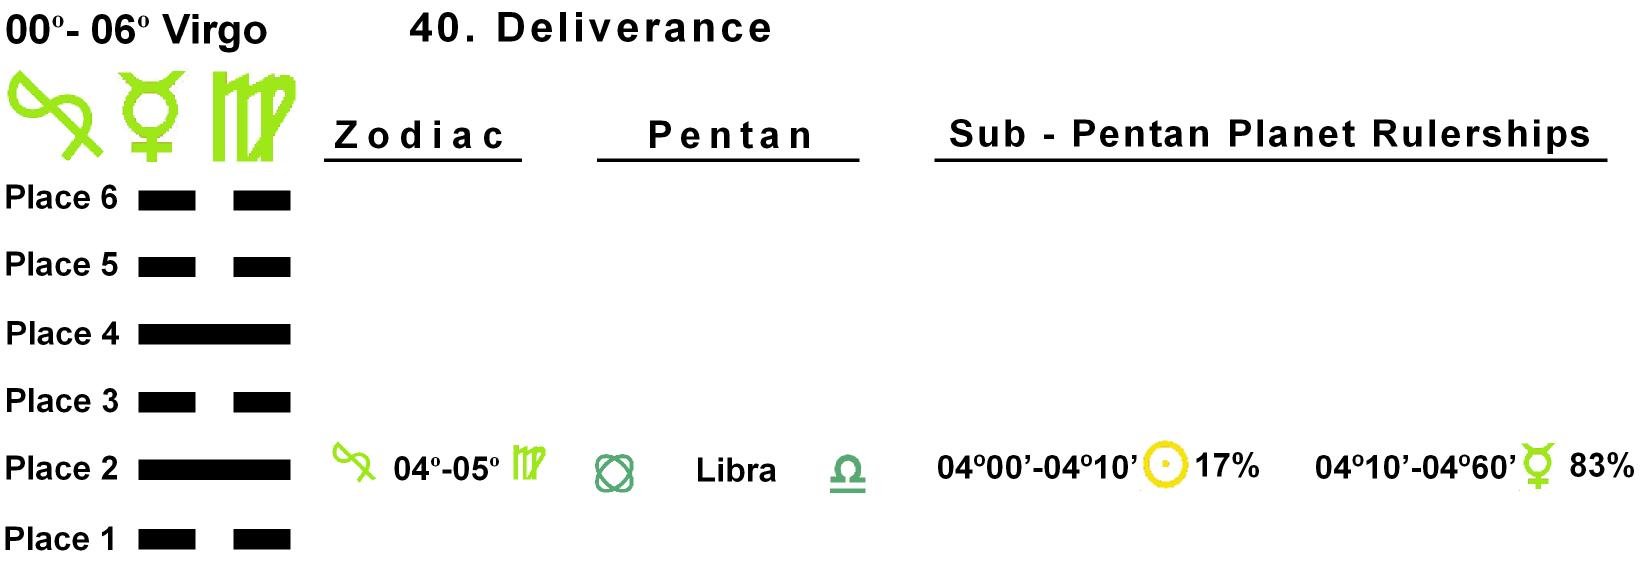 Pent-lines-06VI 04-05 Hx-40 Deliverance